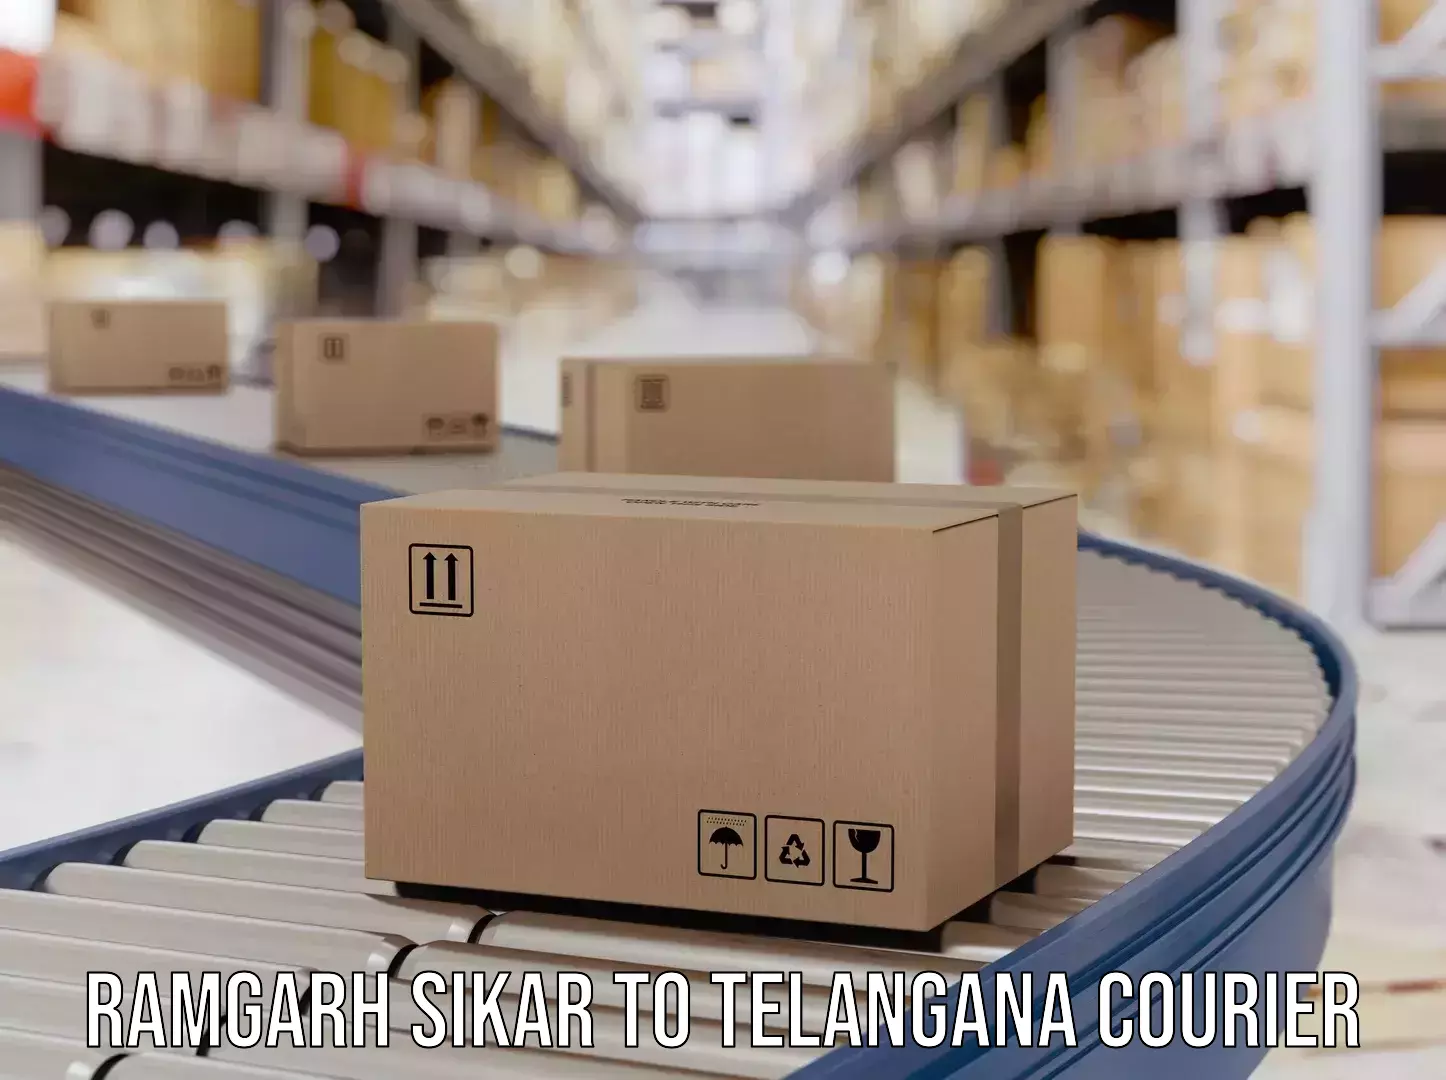 Reliable package handling in Ramgarh Sikar to Yellareddy